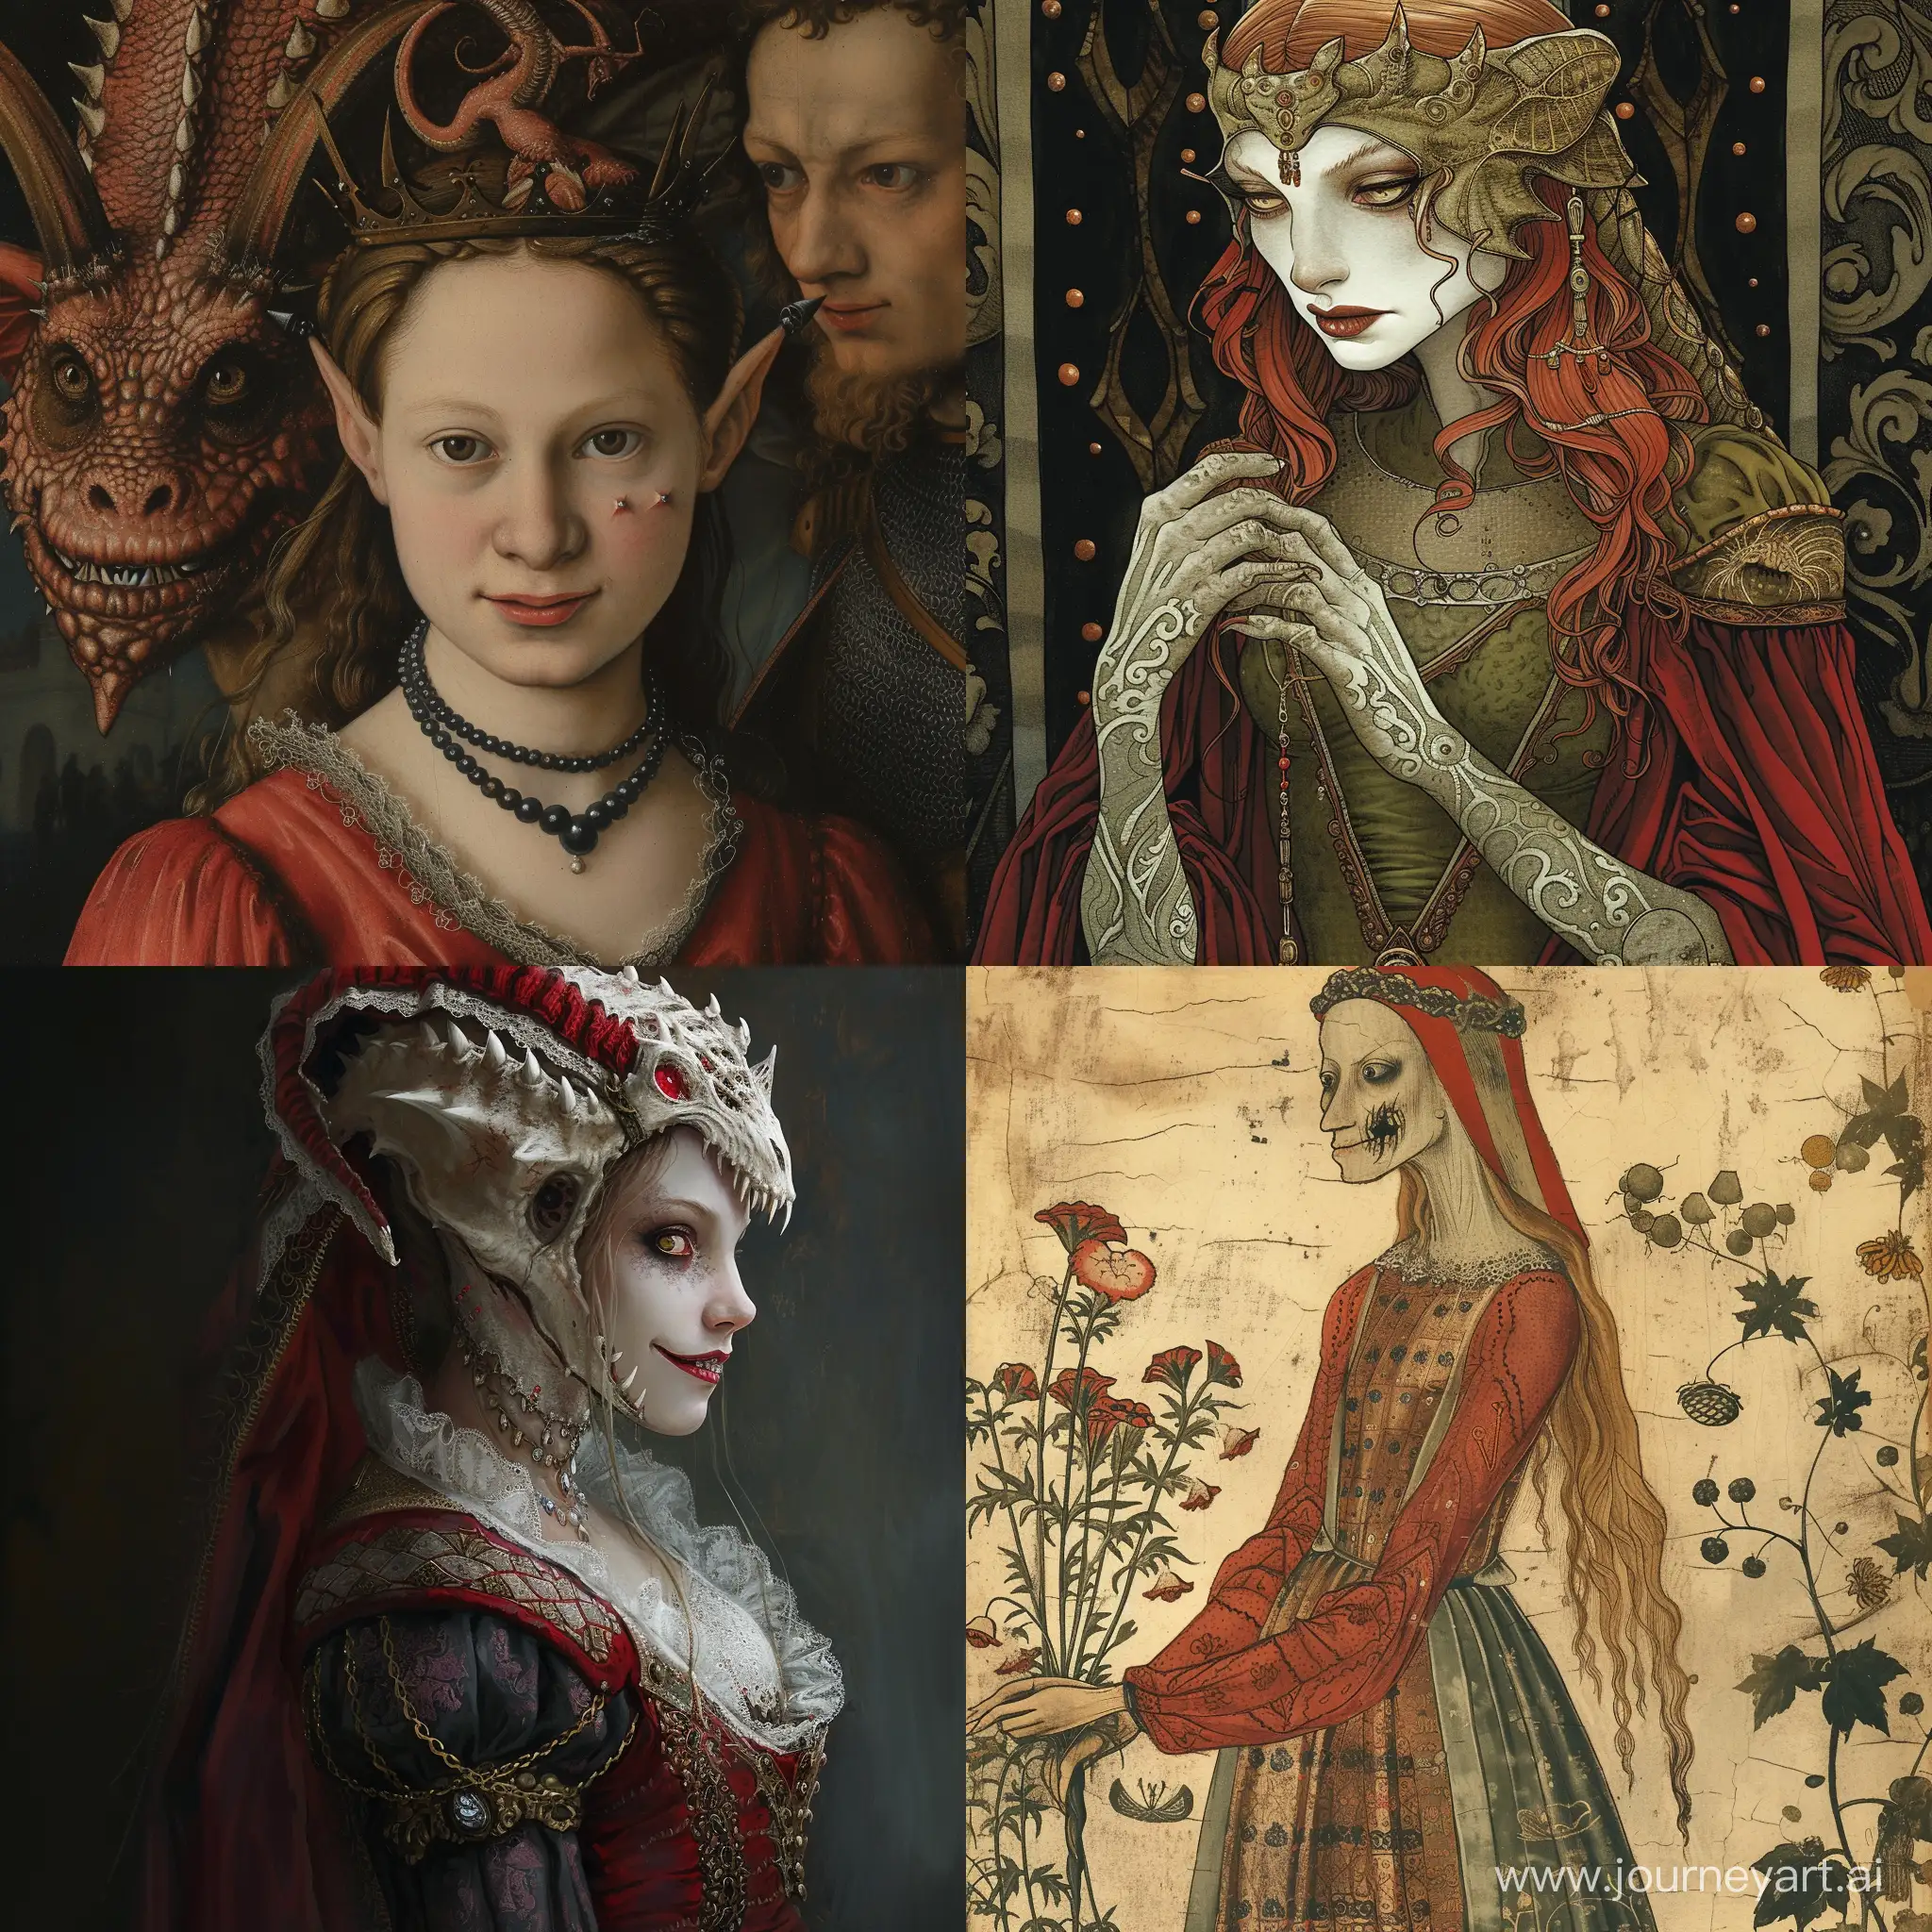 Enchanting-Medieval-Monster-Girl-Captivates-Hearts